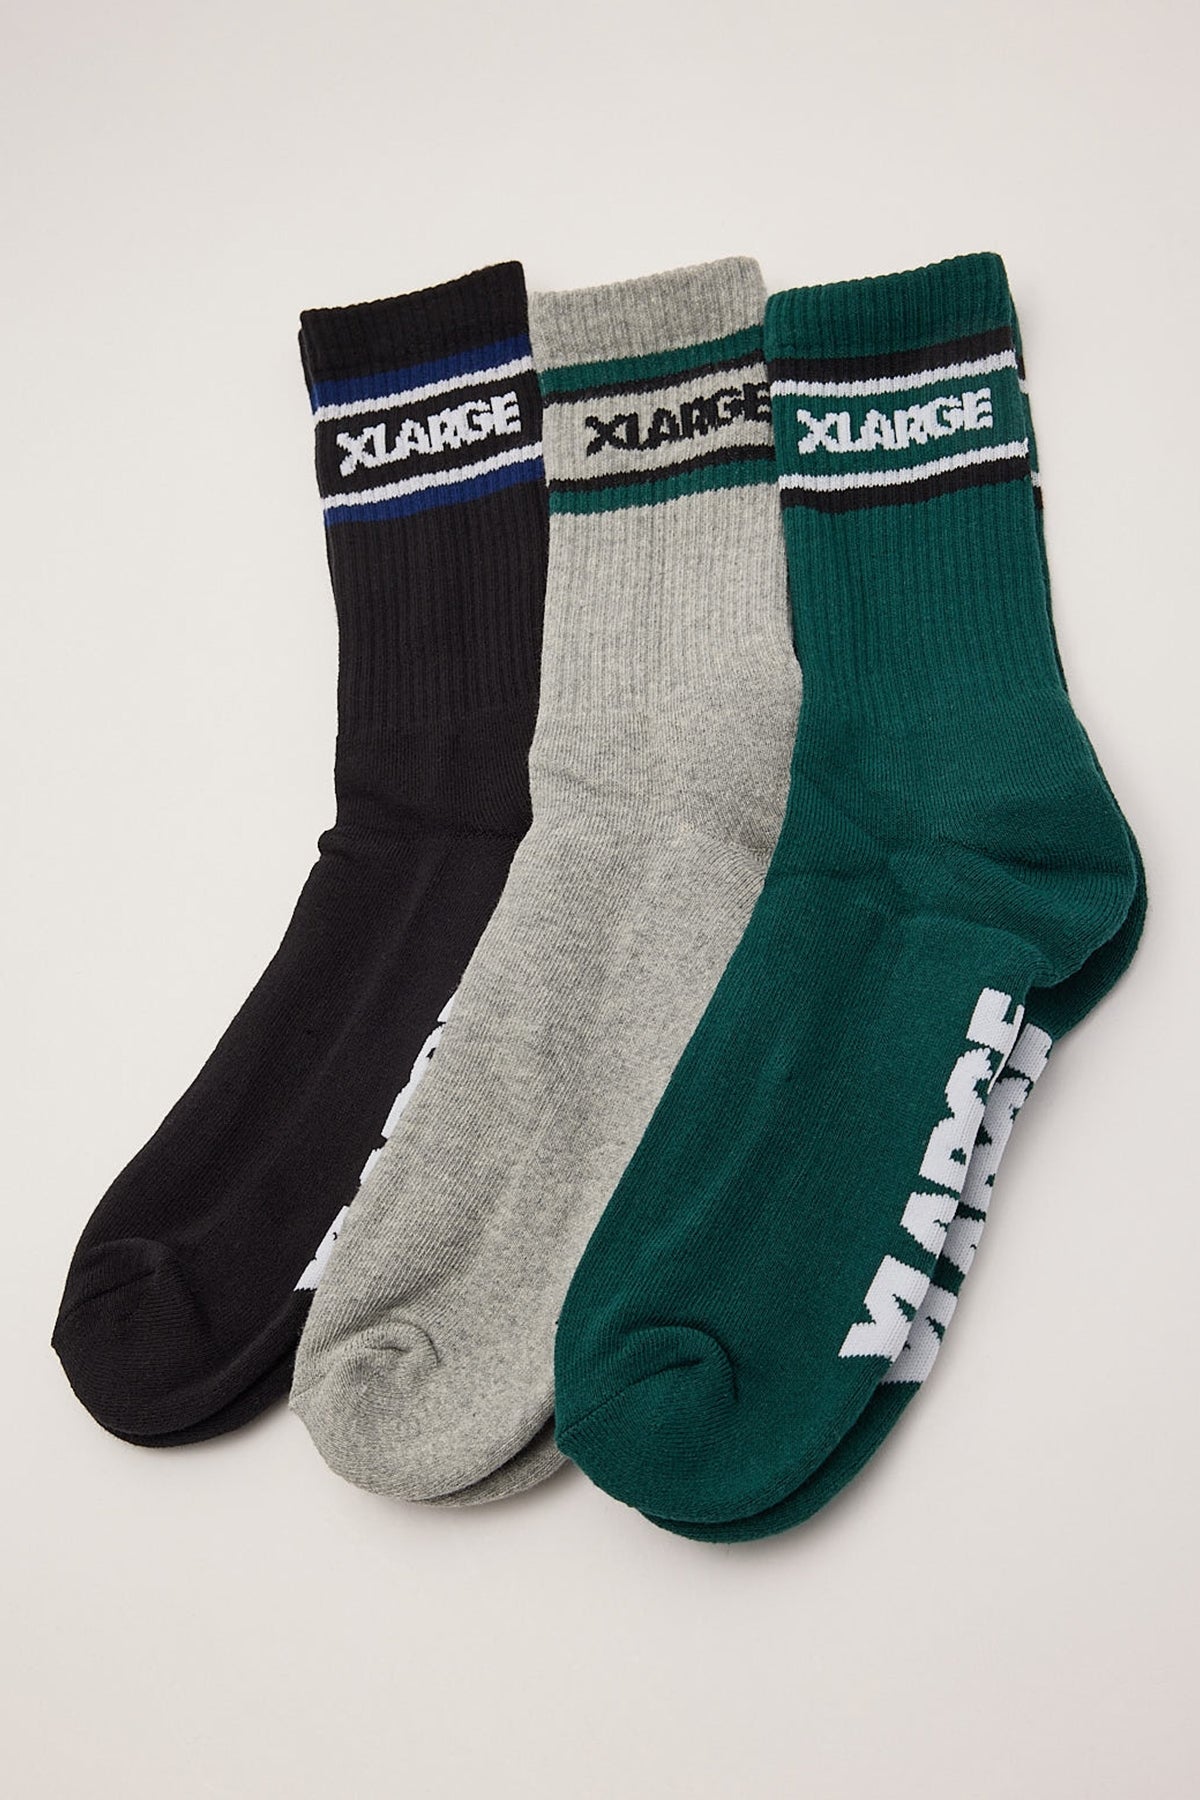 Xlarge 91 Stripe Sock 3pk Assorted